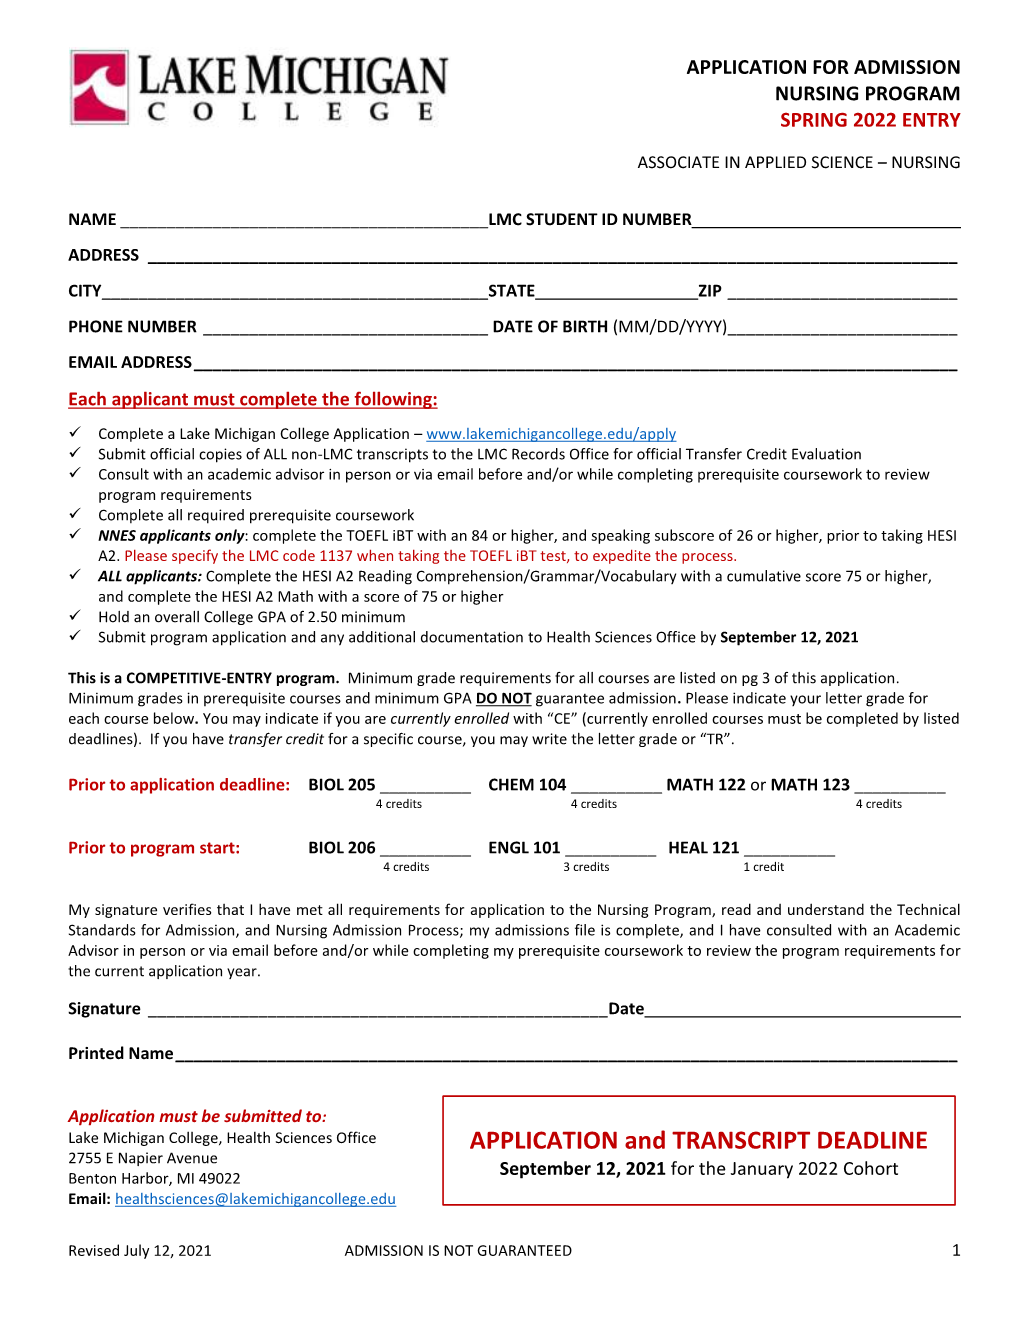 Nursing Program Application Form by the Posted Application Deadline